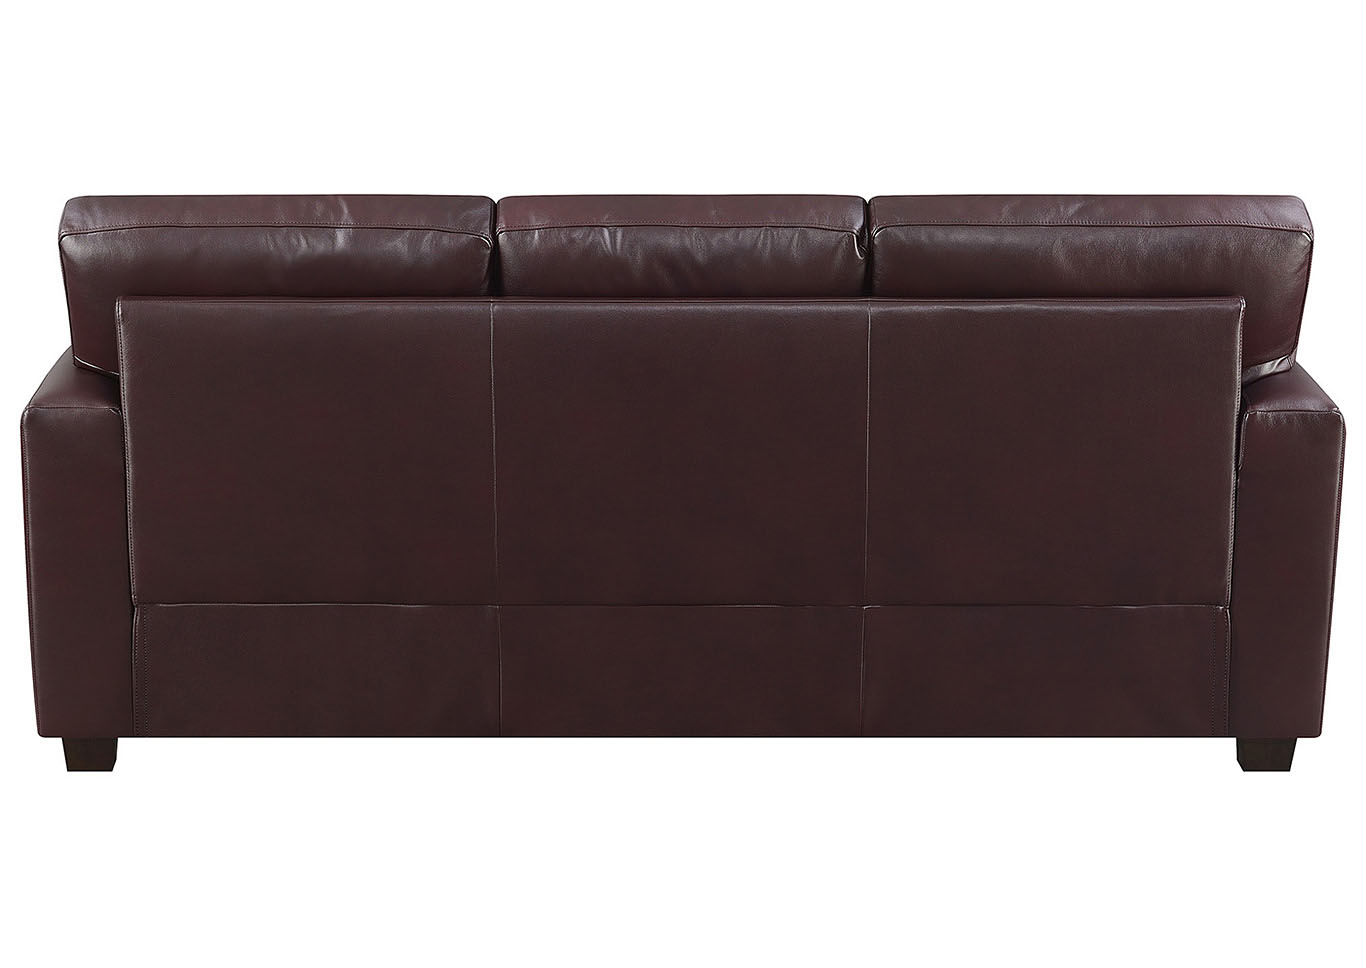 Stephanie Burgundy Leather Match Stationary Sofa Taba Home Furnishings